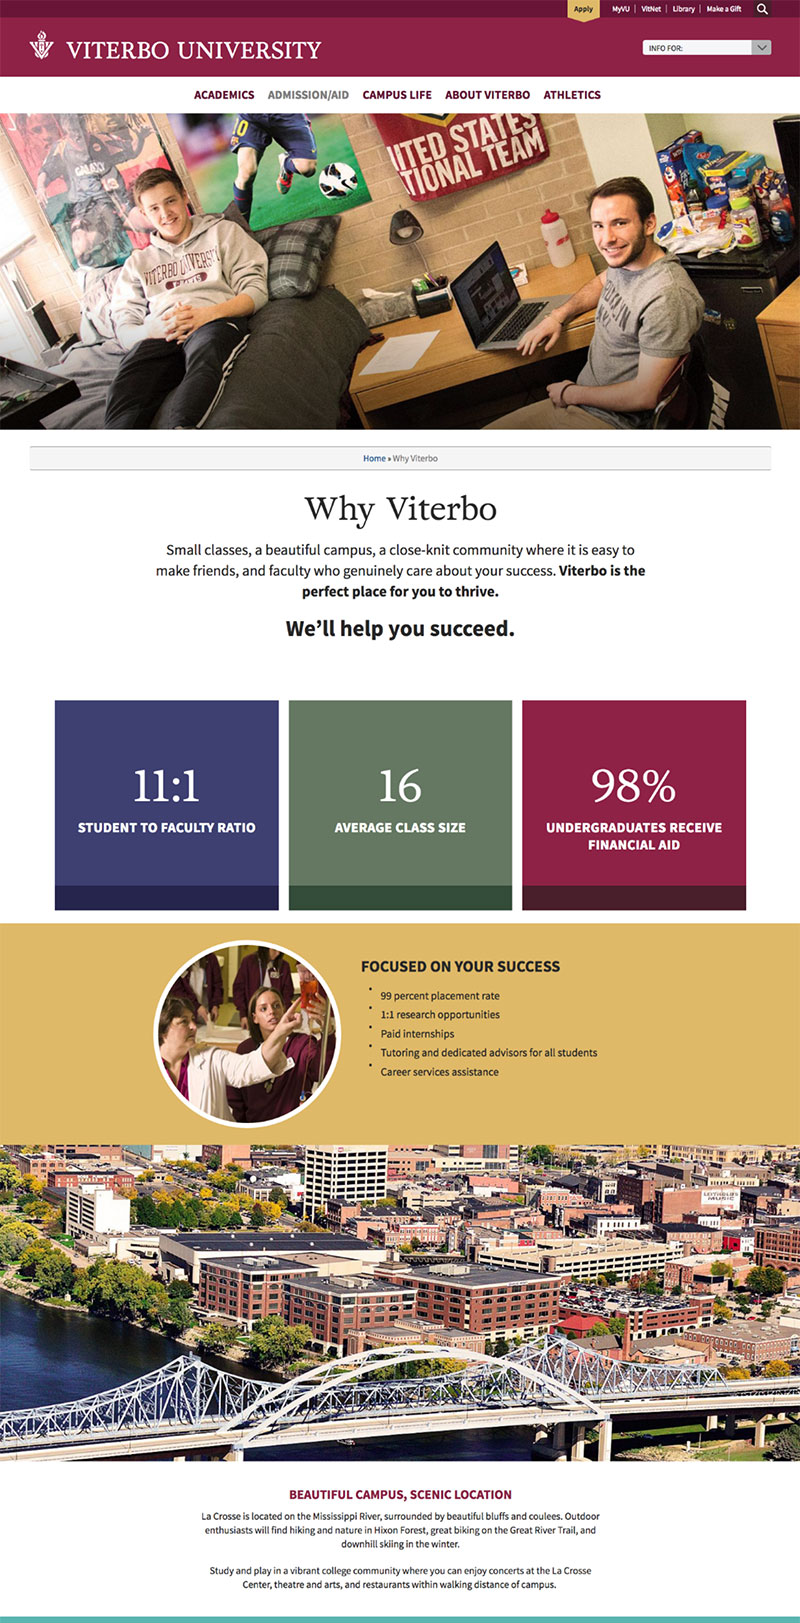 why Viterbo